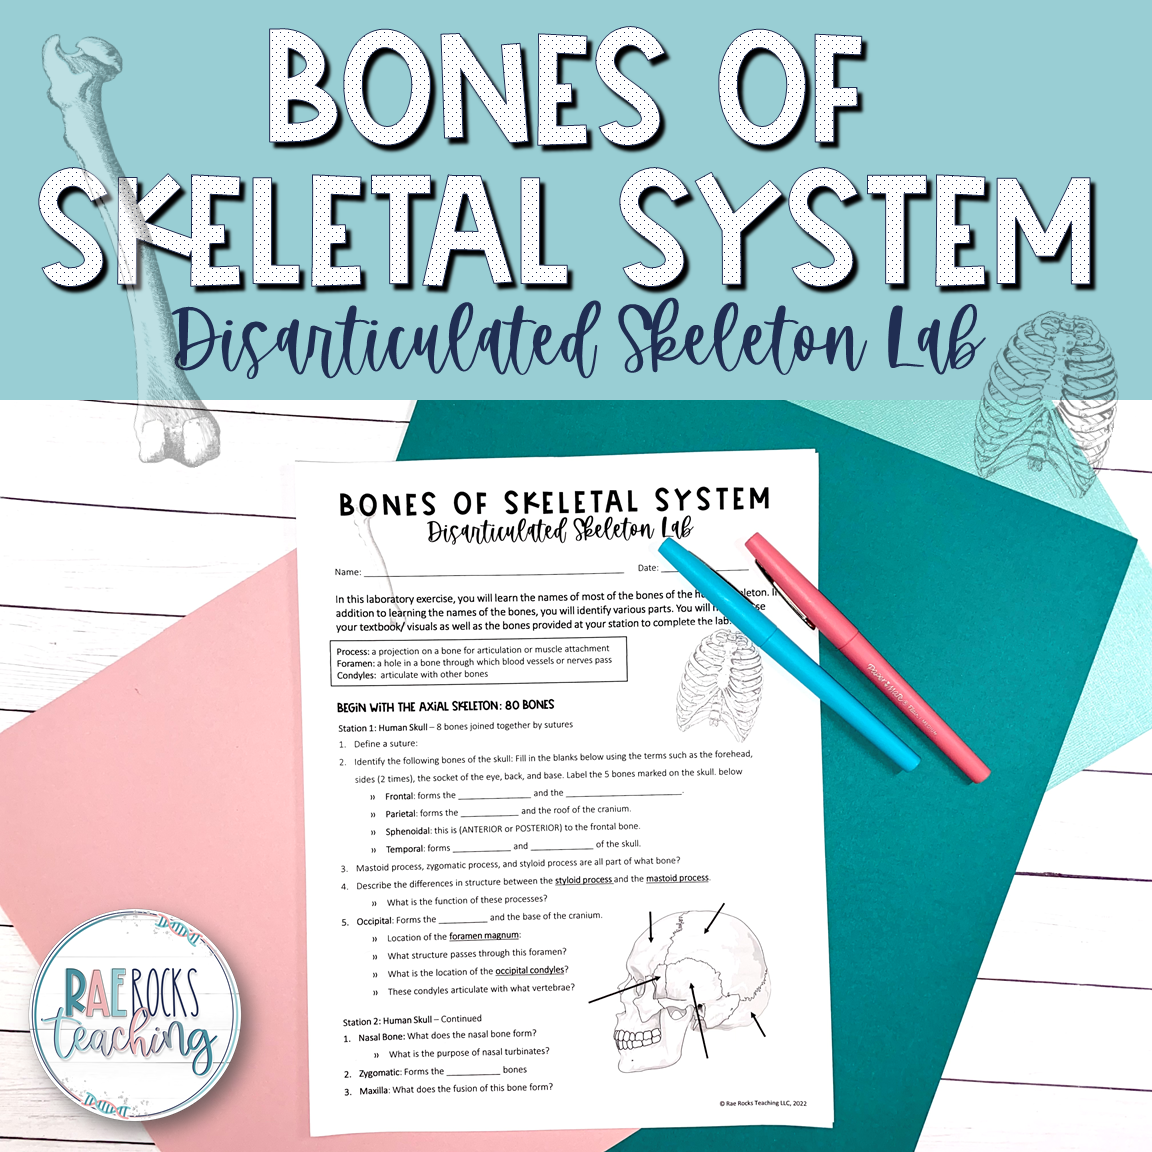 Bones of Skeletal System